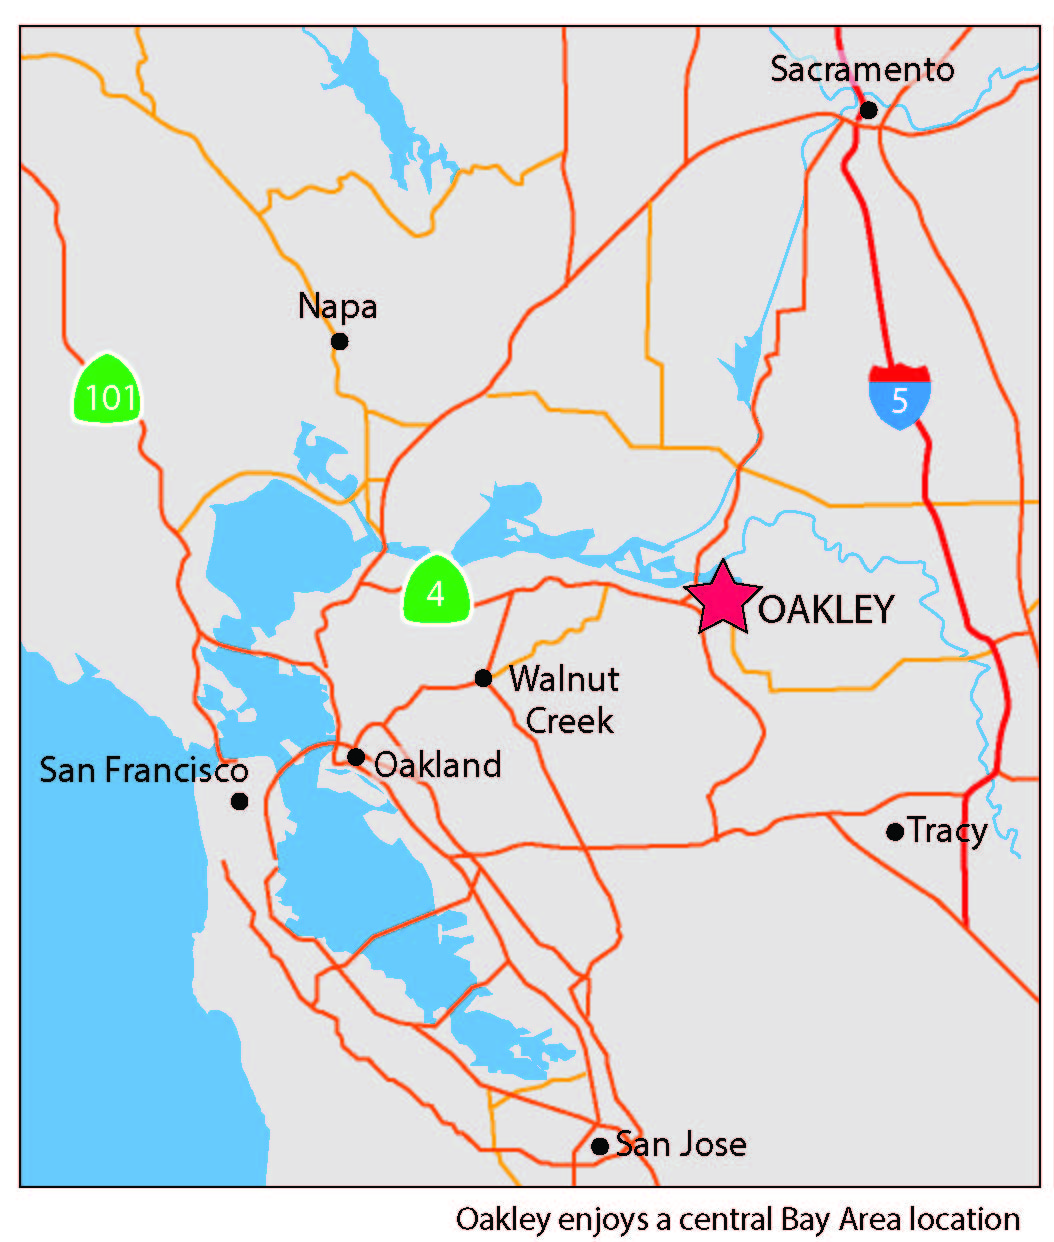 city of oakley ca